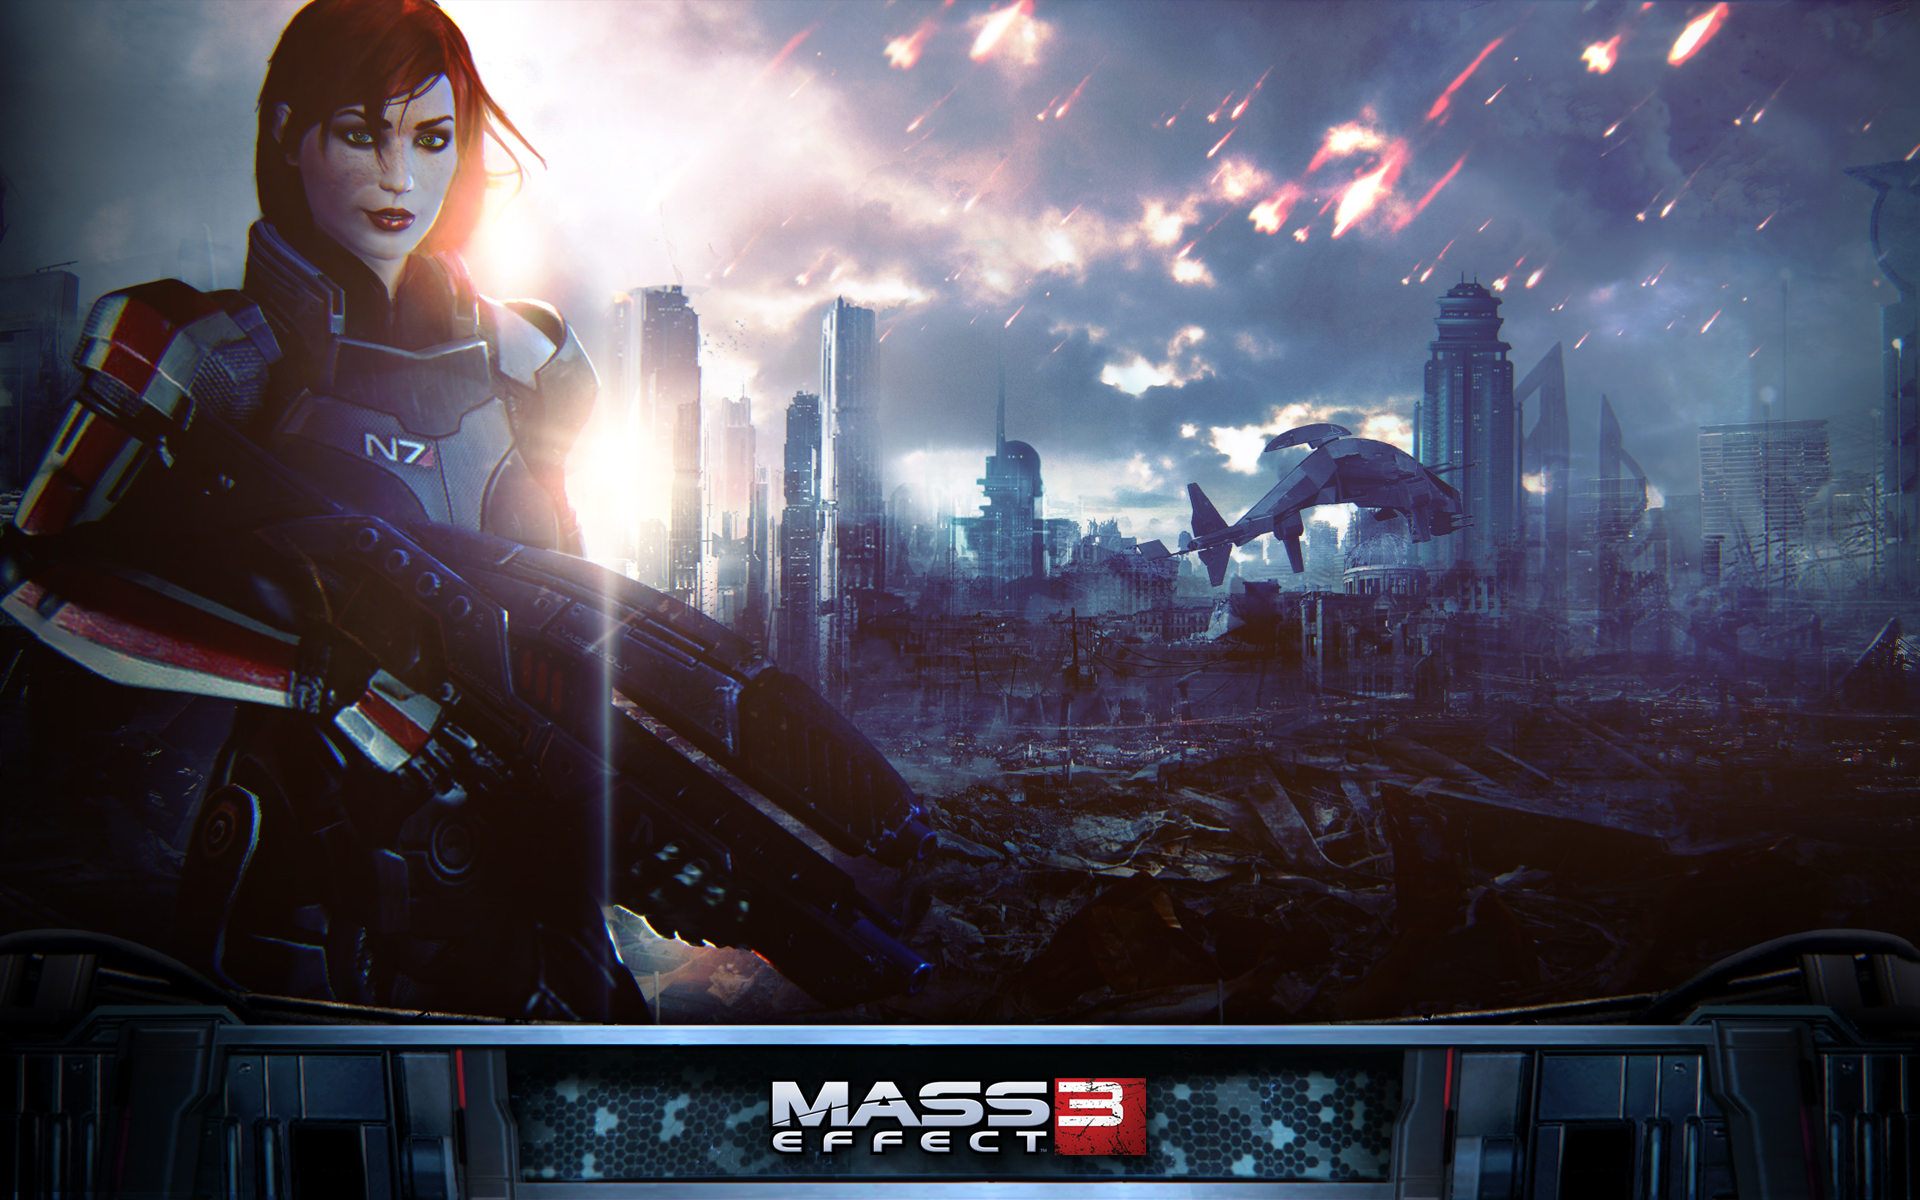 Femshep In Mass Effect Thread Ec Spoilers Allowed